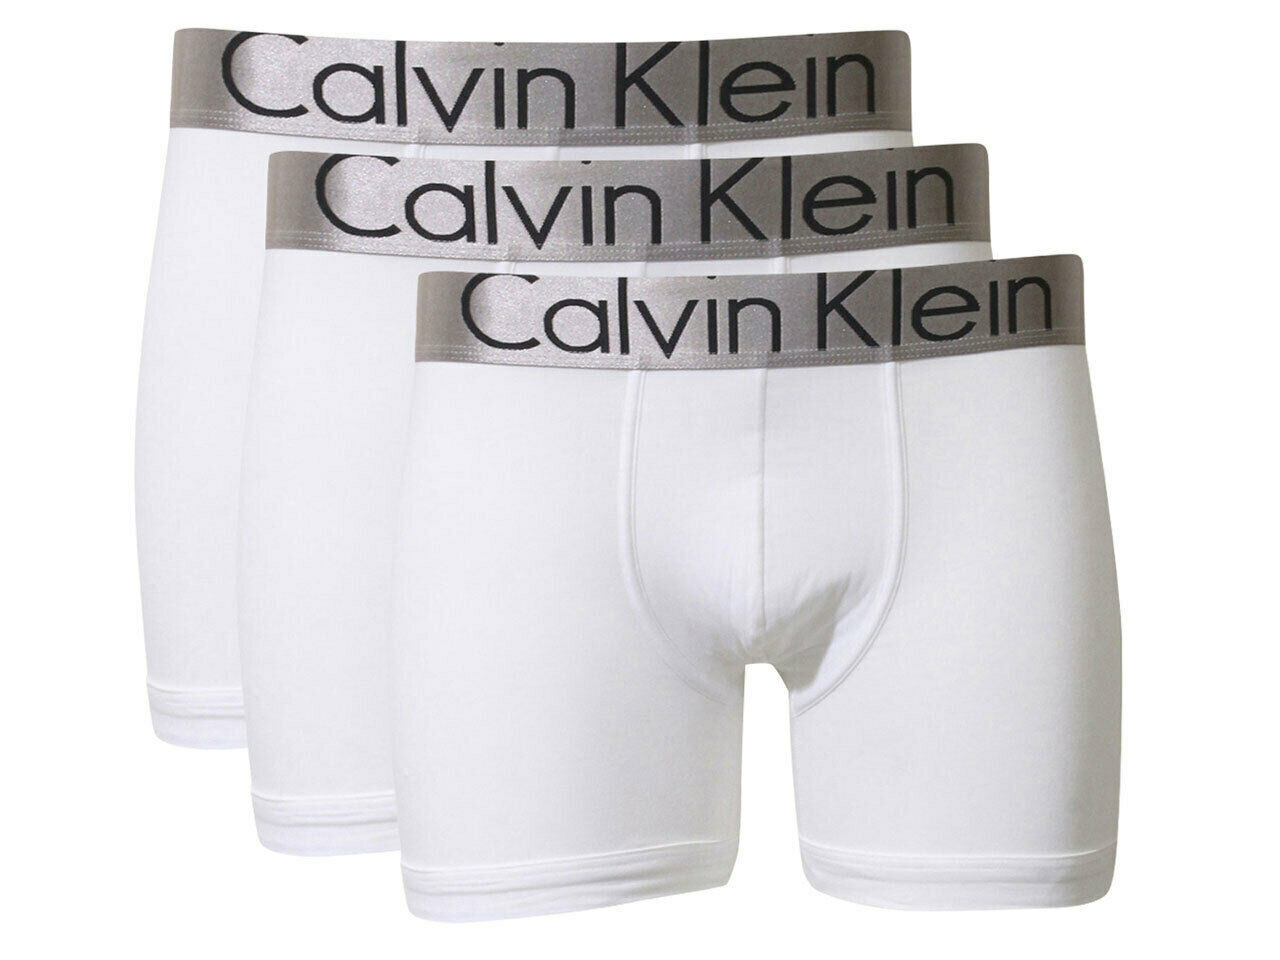 Lacoste Underwear Boxer Brief (3-Pack) black/white/silver Boxers